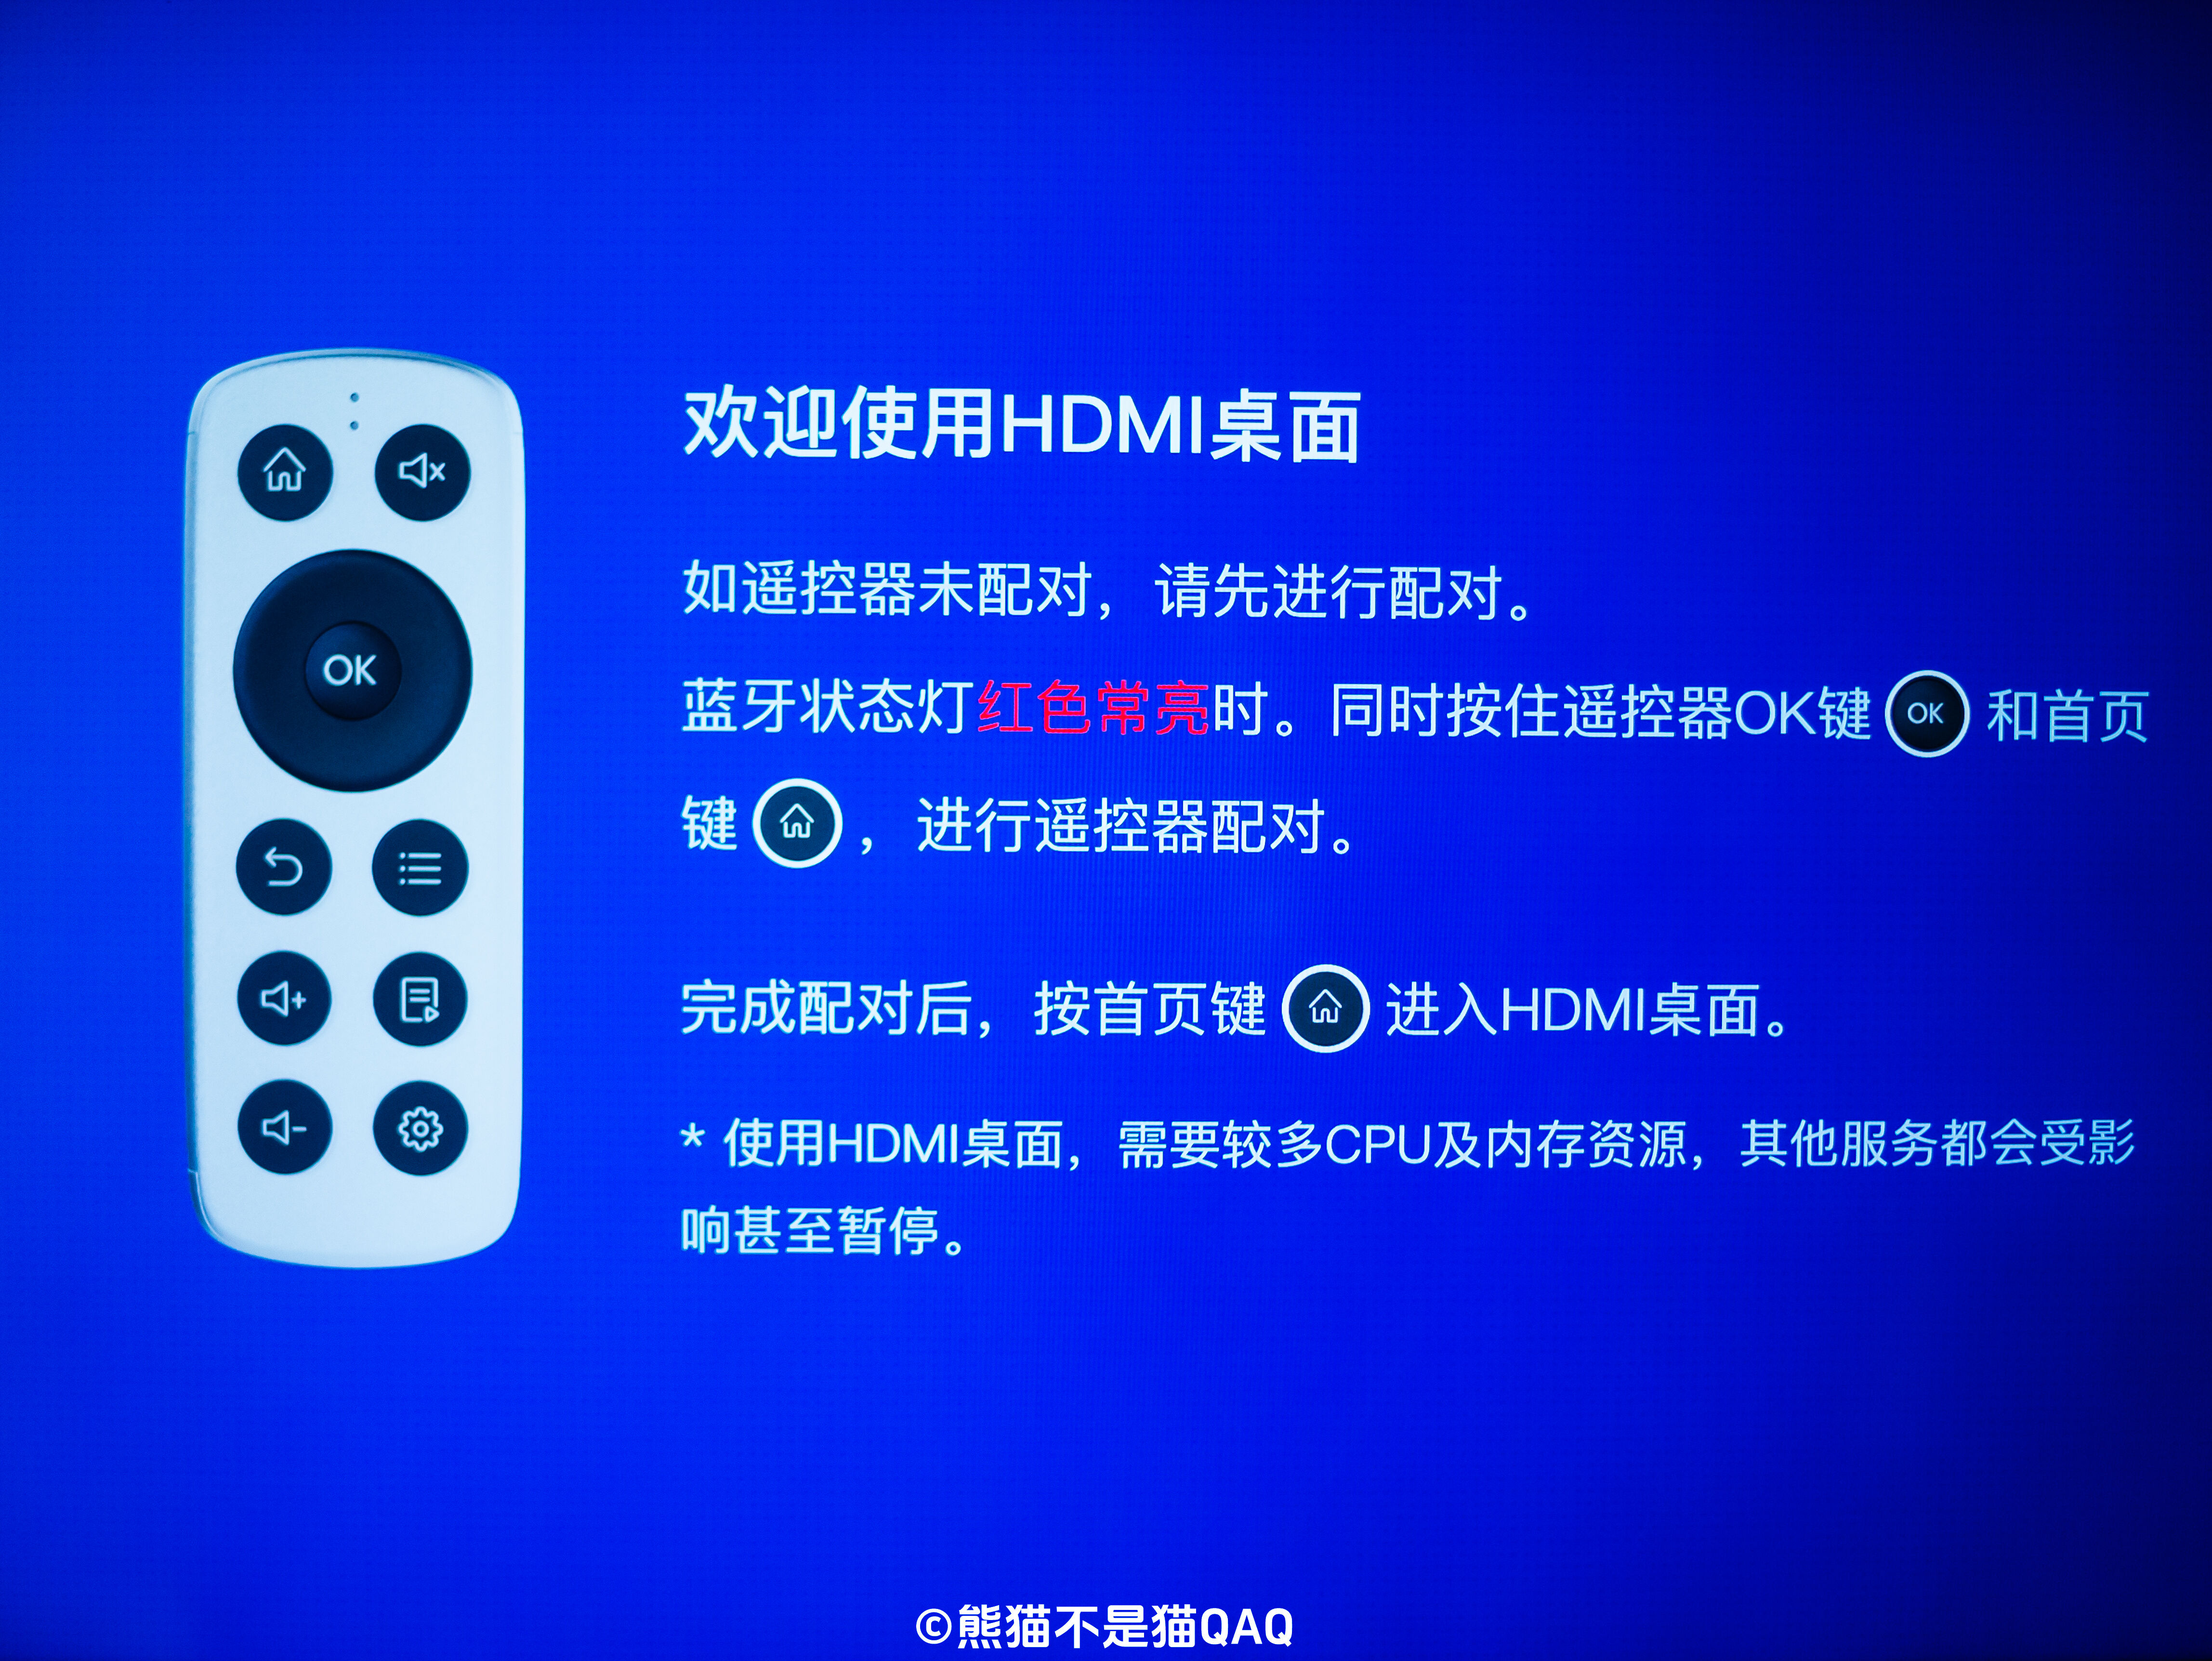 HDMI桌面